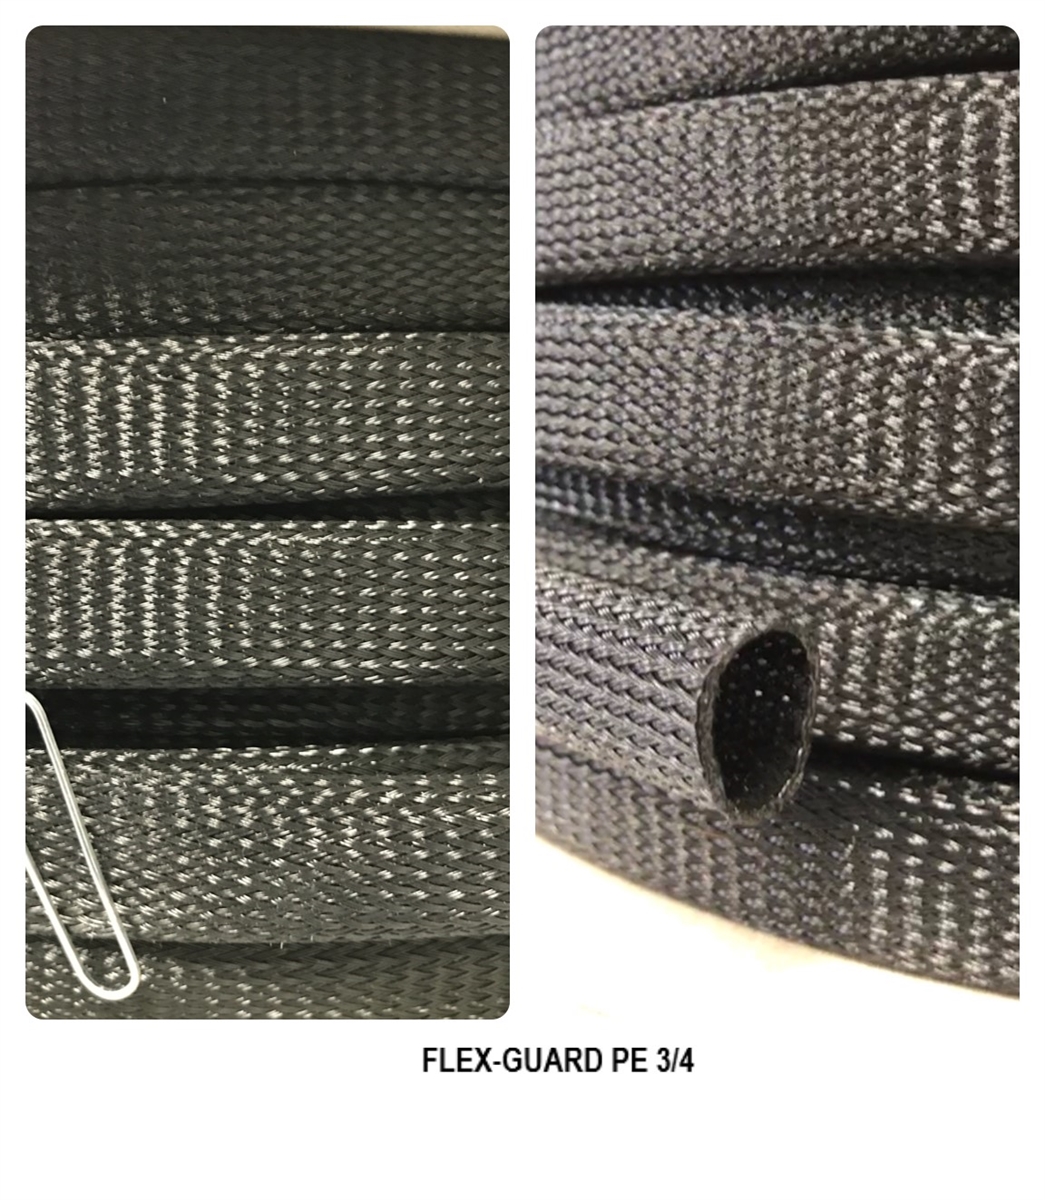 FLEX-GUARD PE 3/4 - ALTA - 3/4 General purpose braided PET